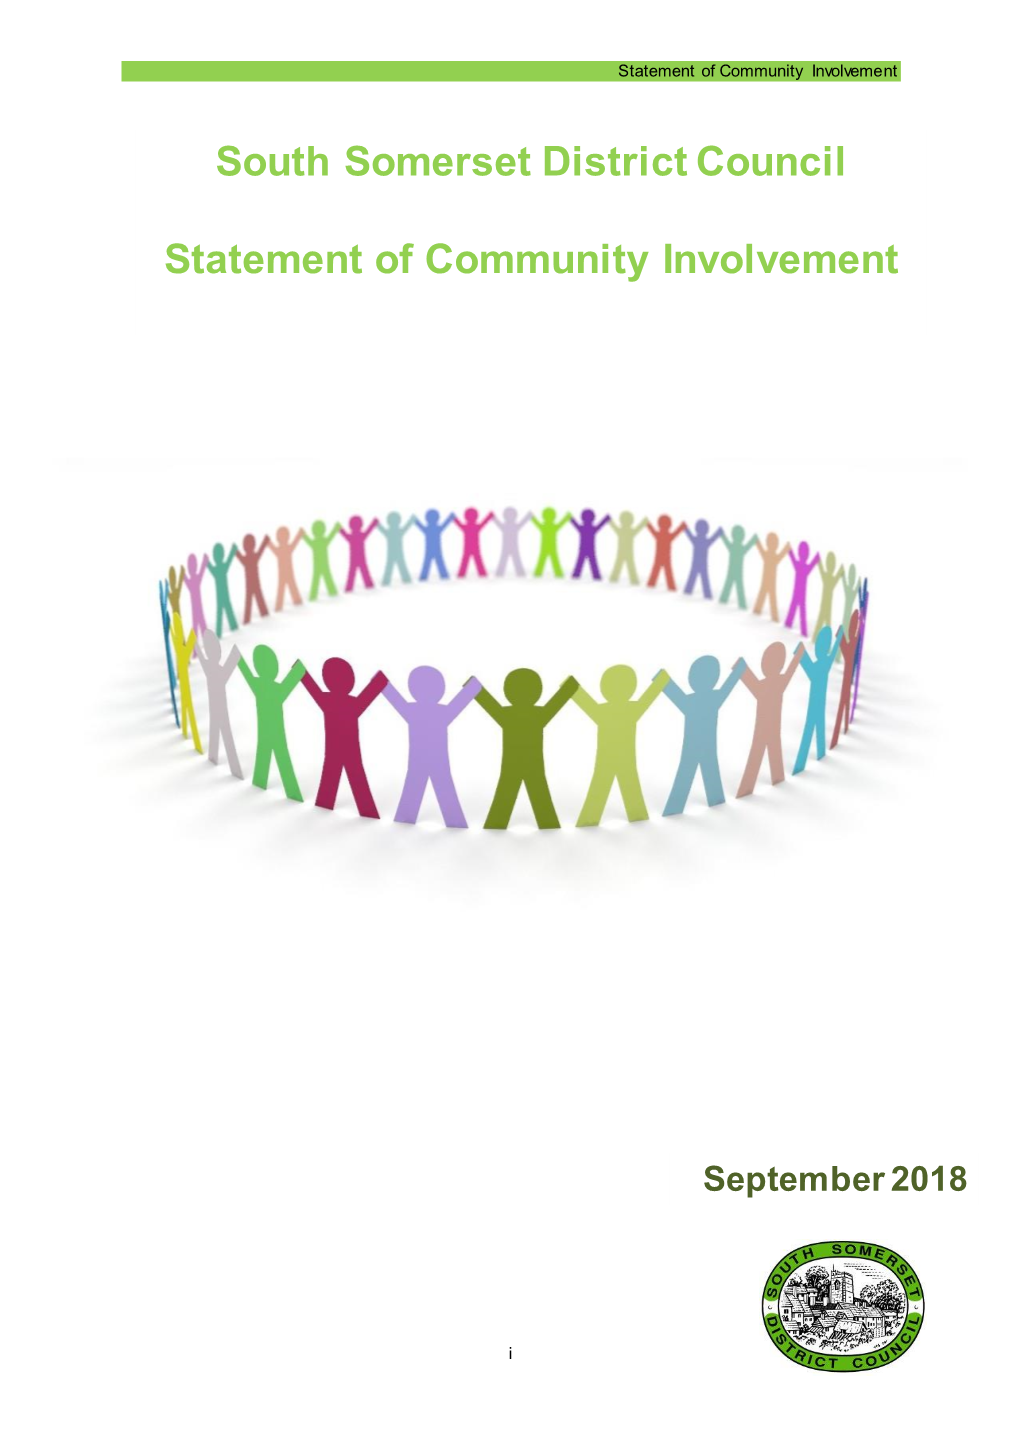 Statement of Community Involvement Final September 2018 [PDF]